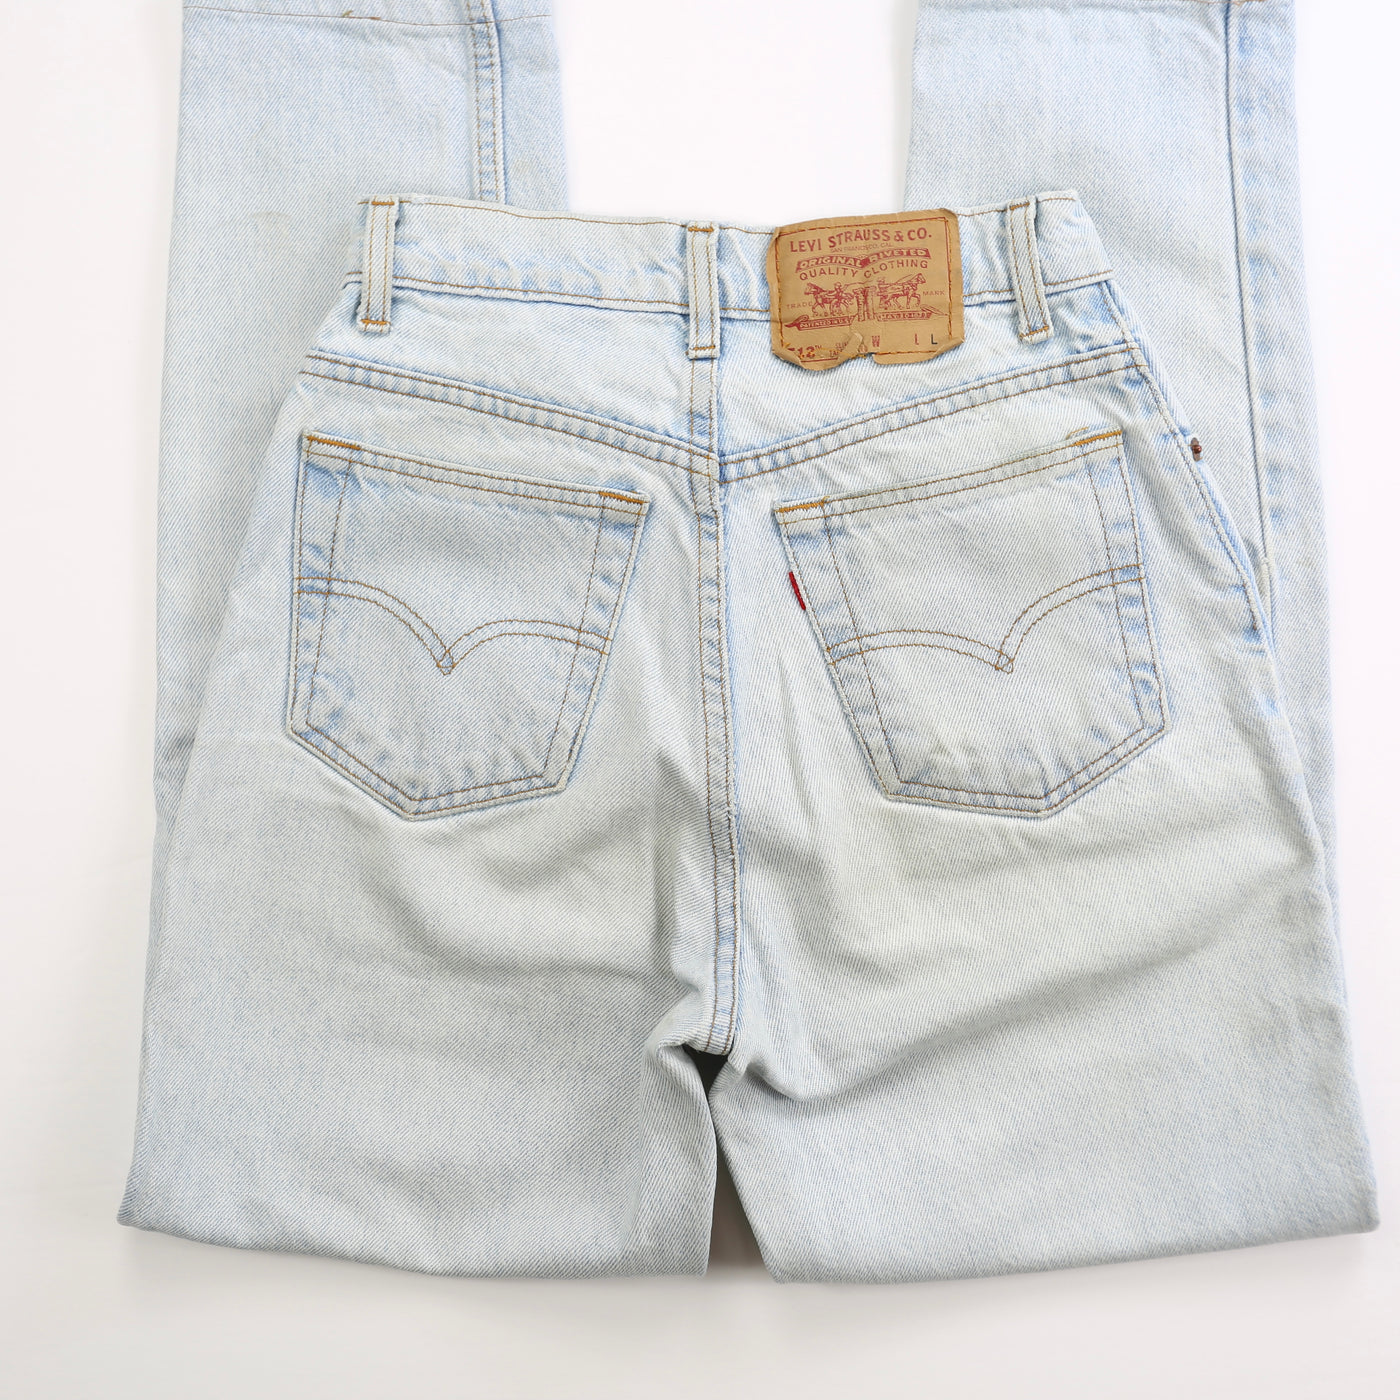 Vintage Levis 512 Light Wash High Waisted Jeans